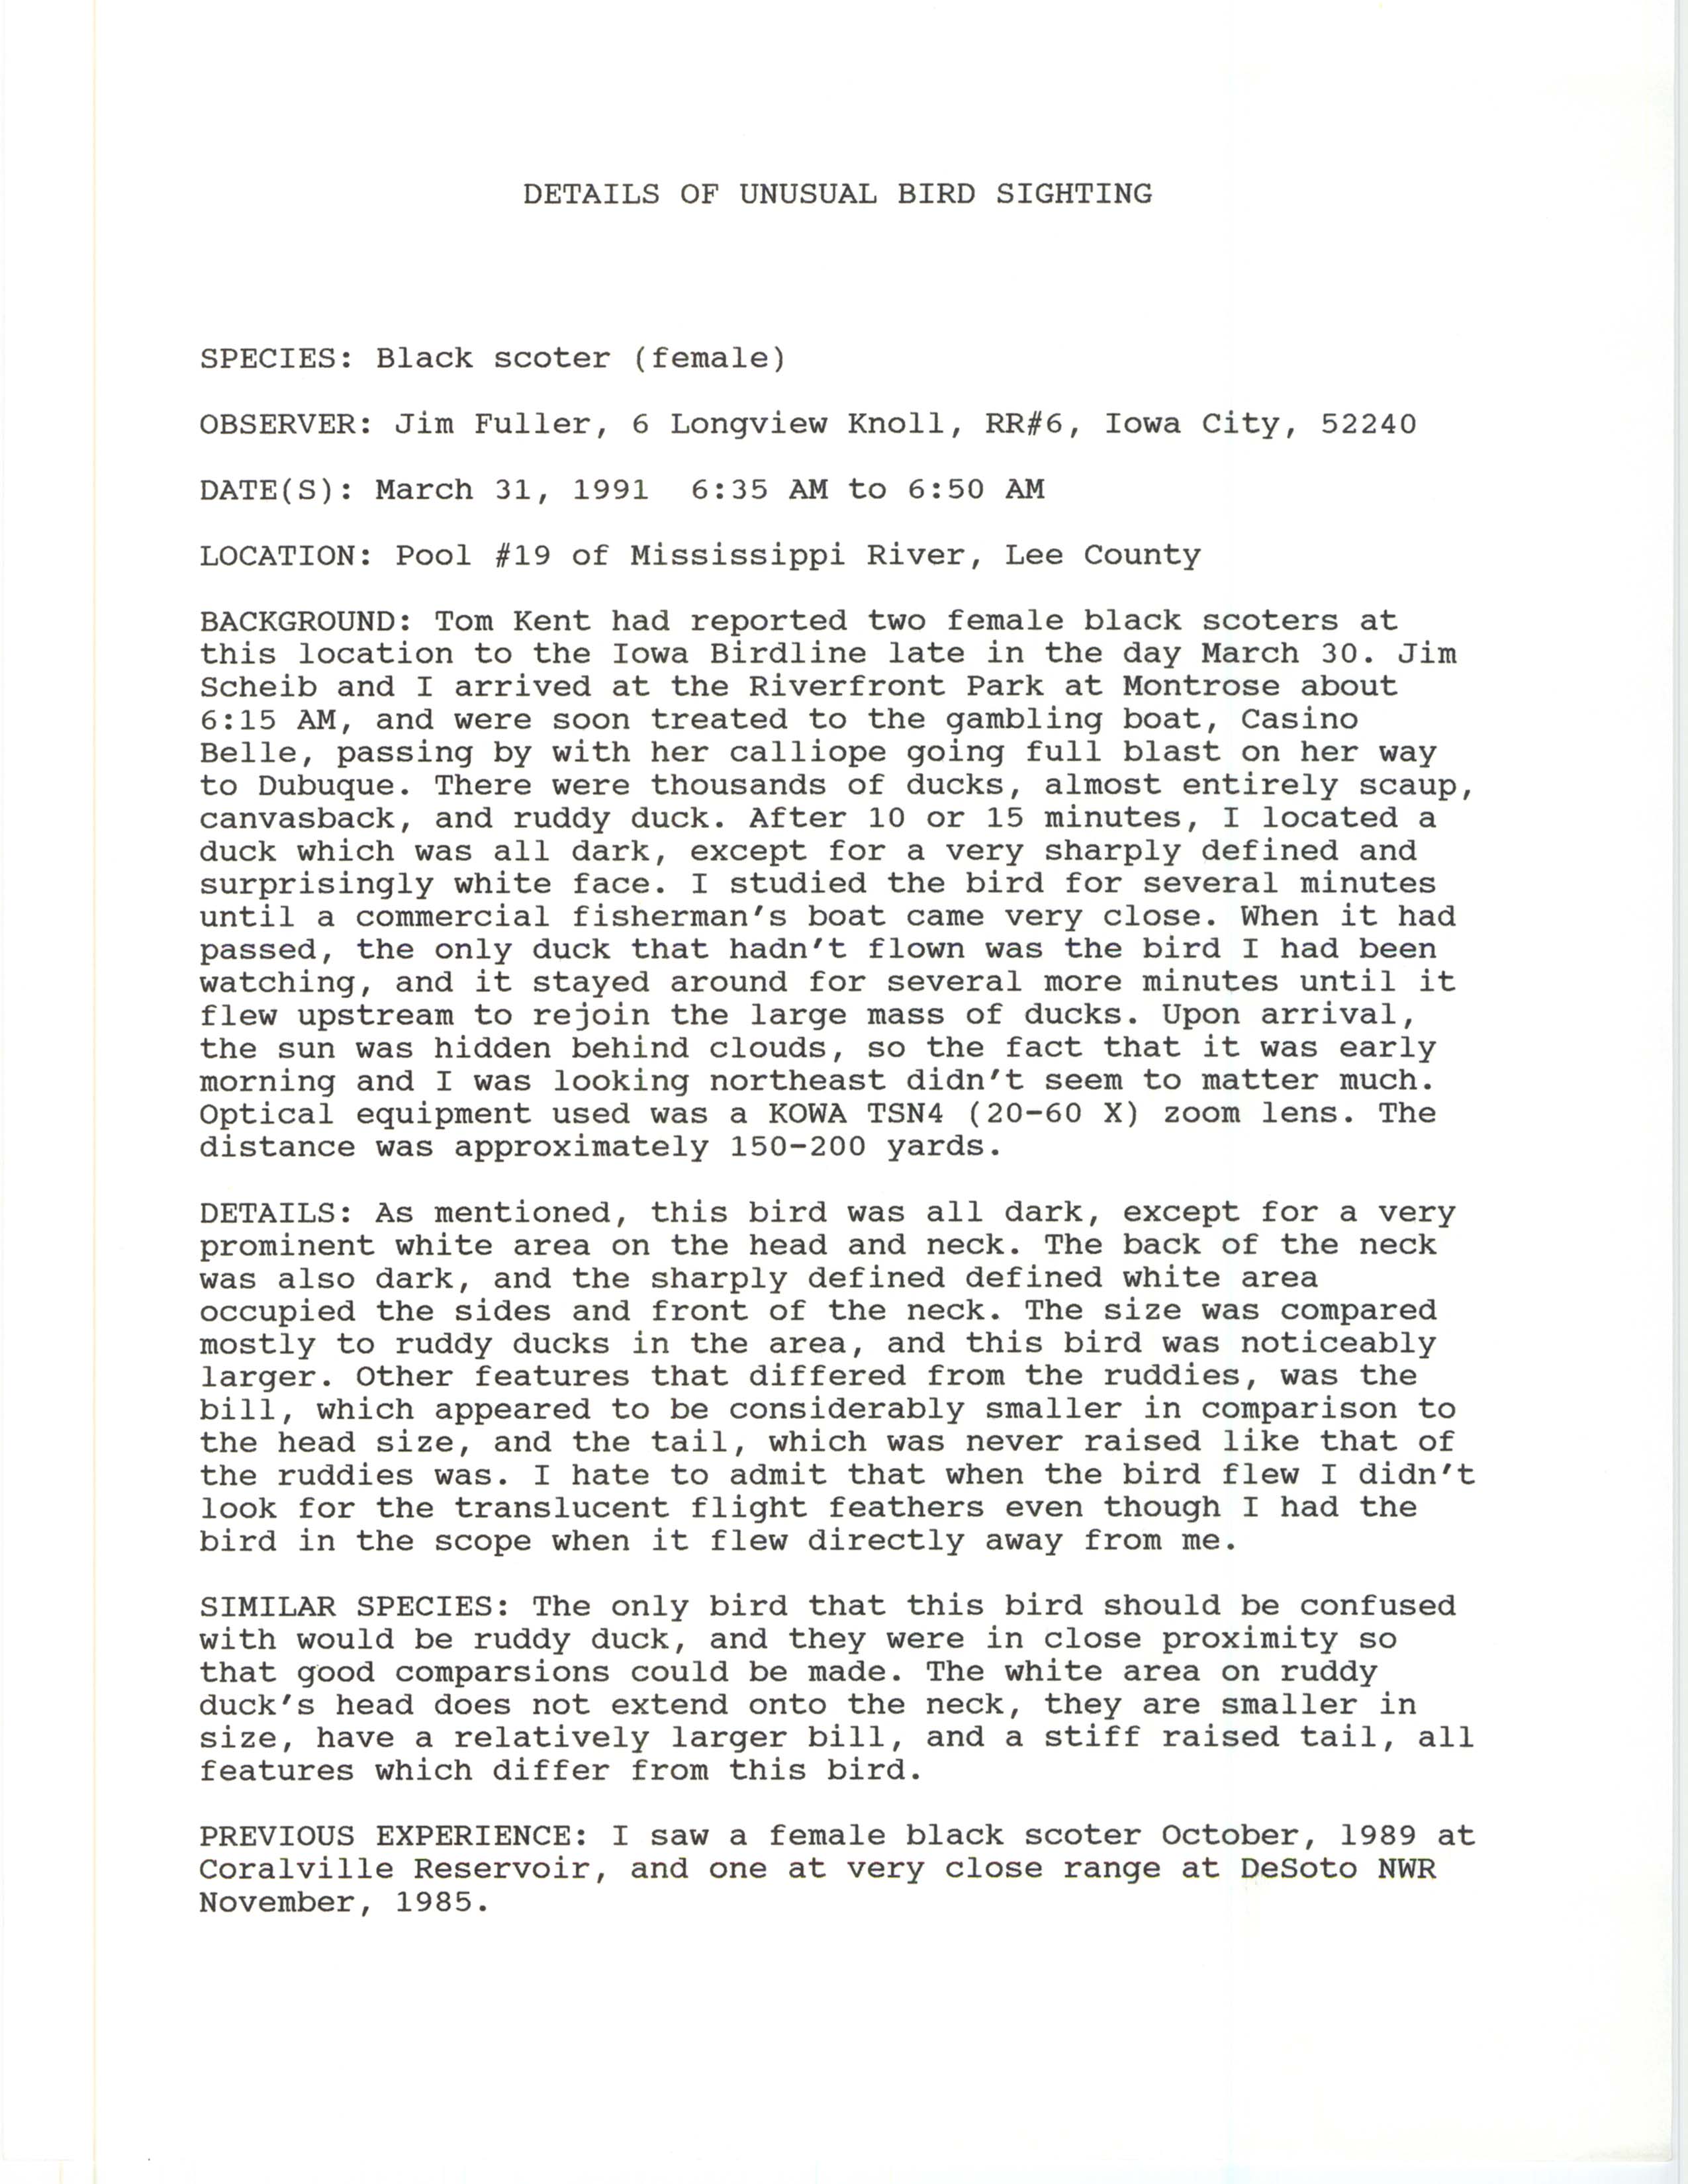 Rare bird documentation form for Black Scoter at Pool 19, 1991